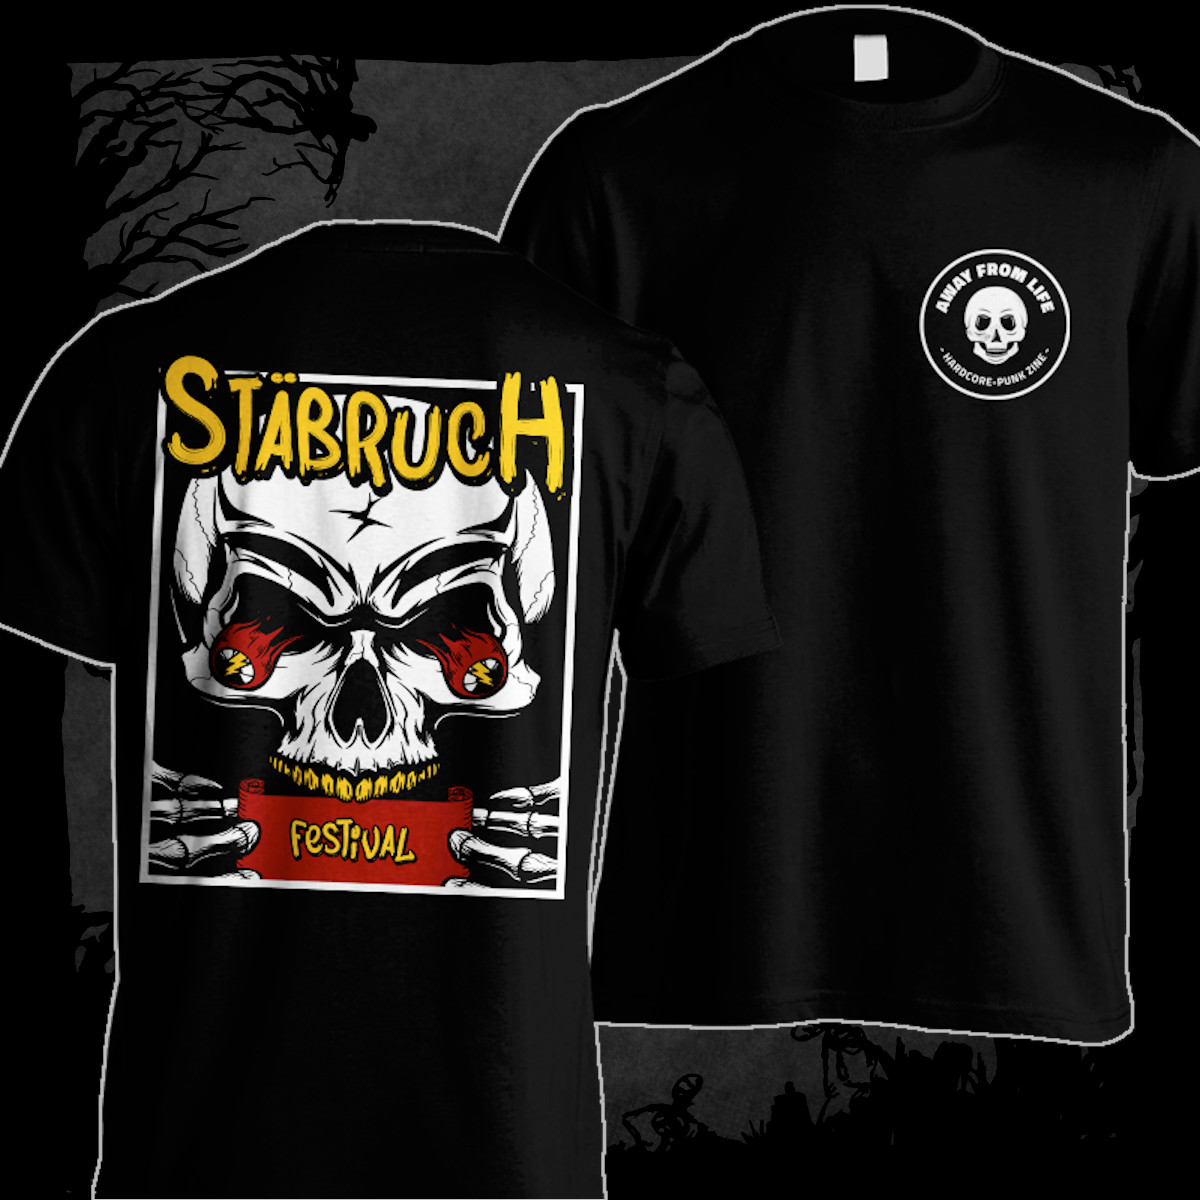 Stäbruch - 2018 [T-Shirt] (Farbe schwarz, Two-Sided-Print: weiß, gelb, rot)